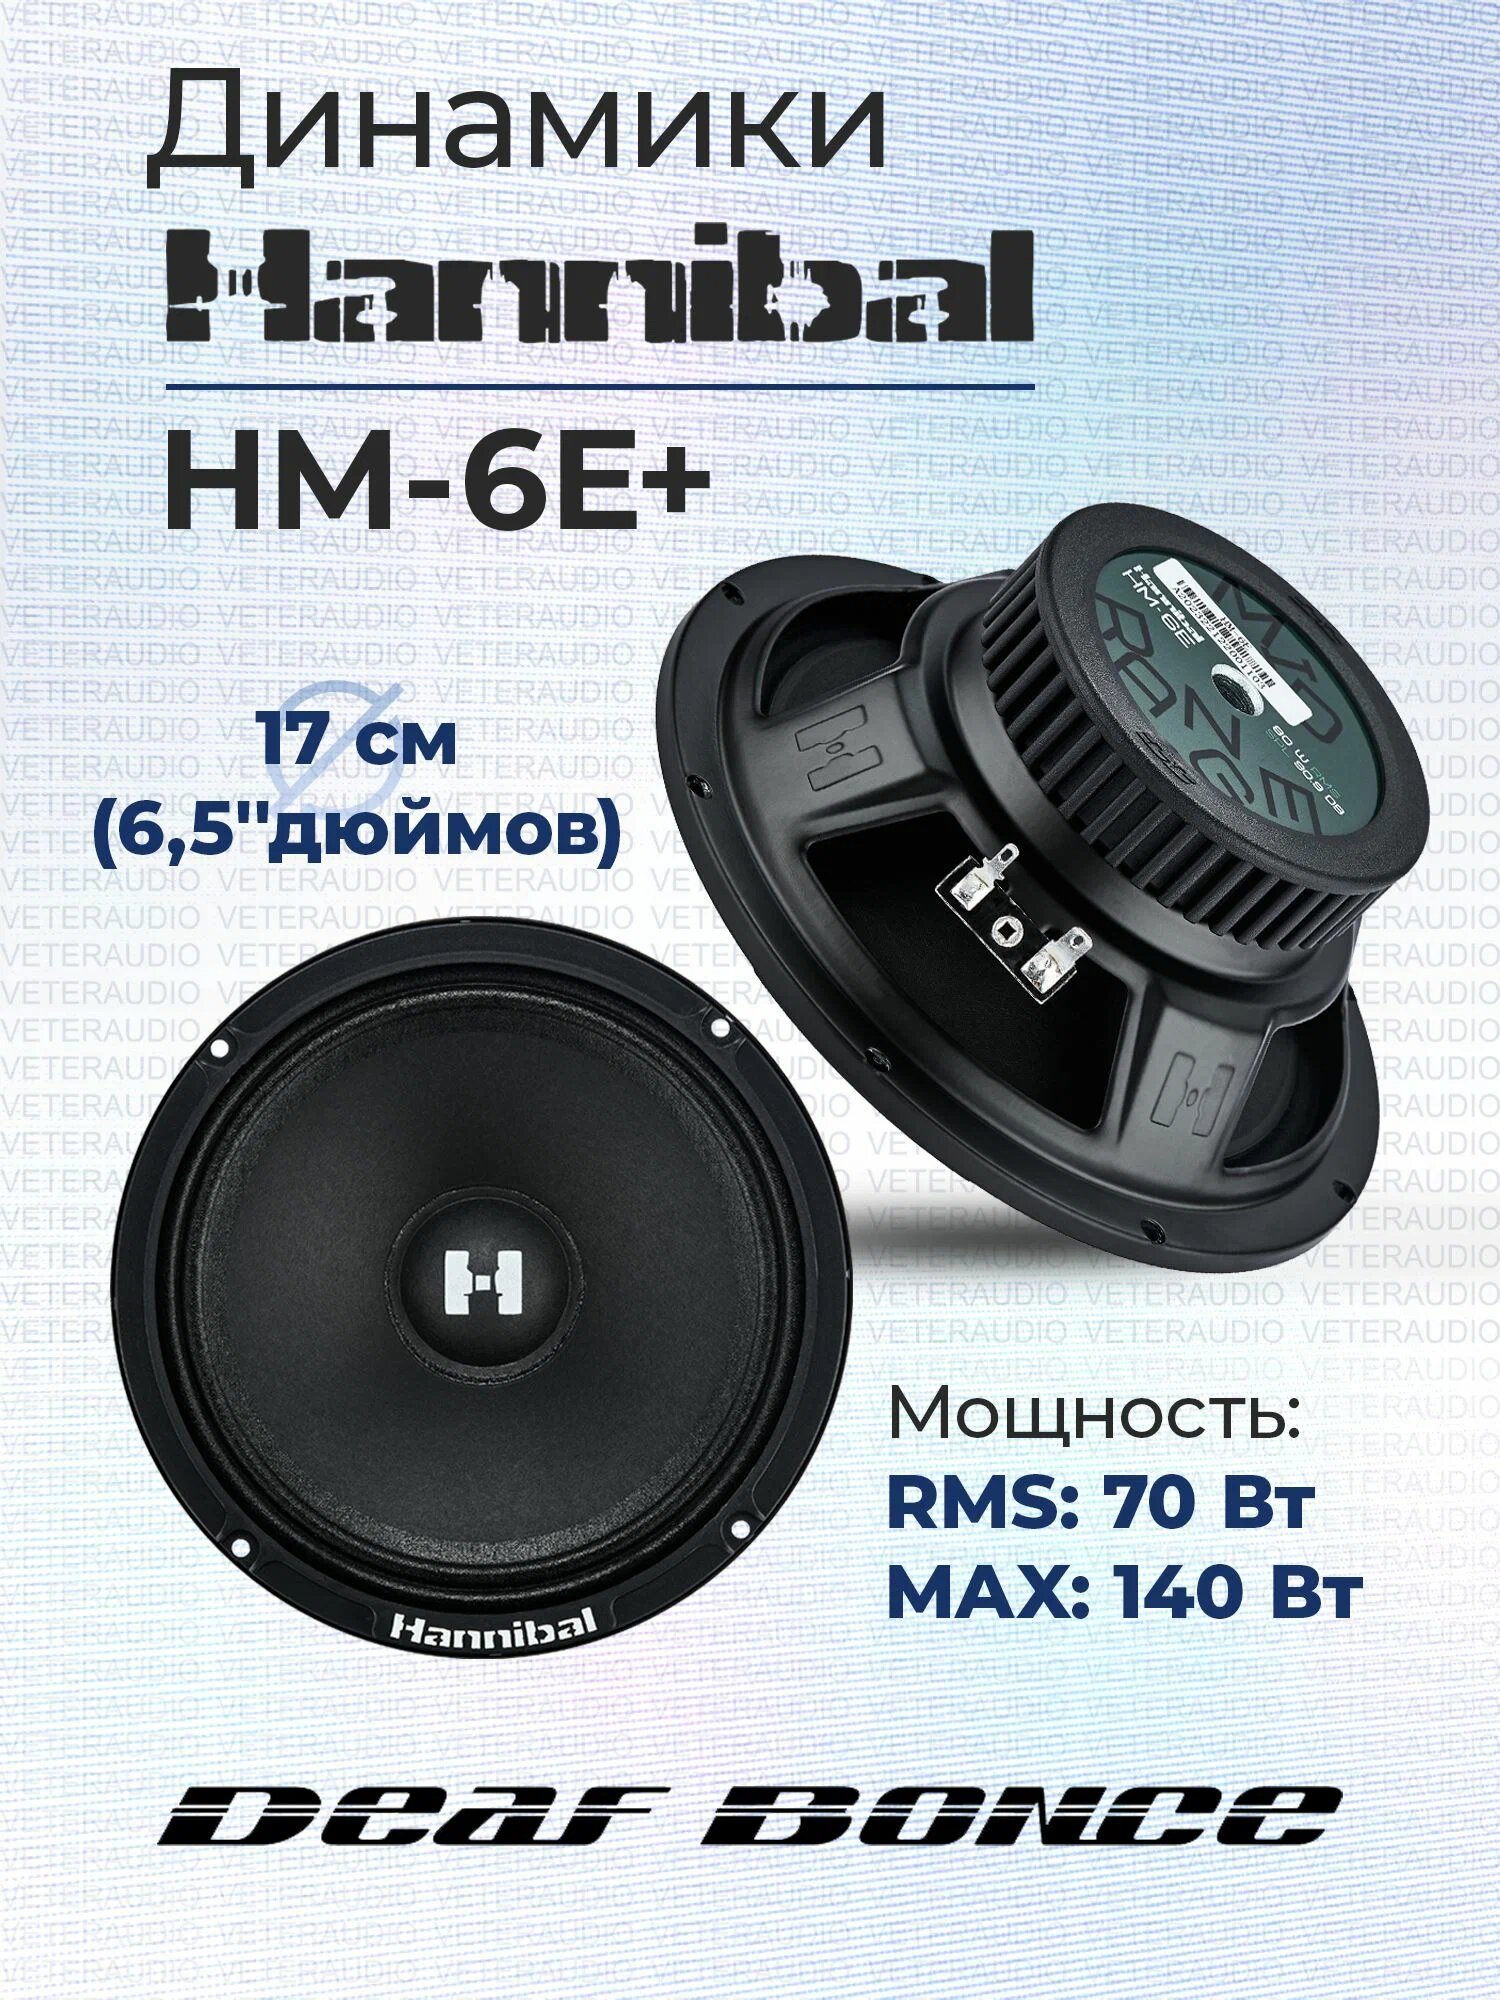 Эстрадная акустика Hannibal HM-6E+